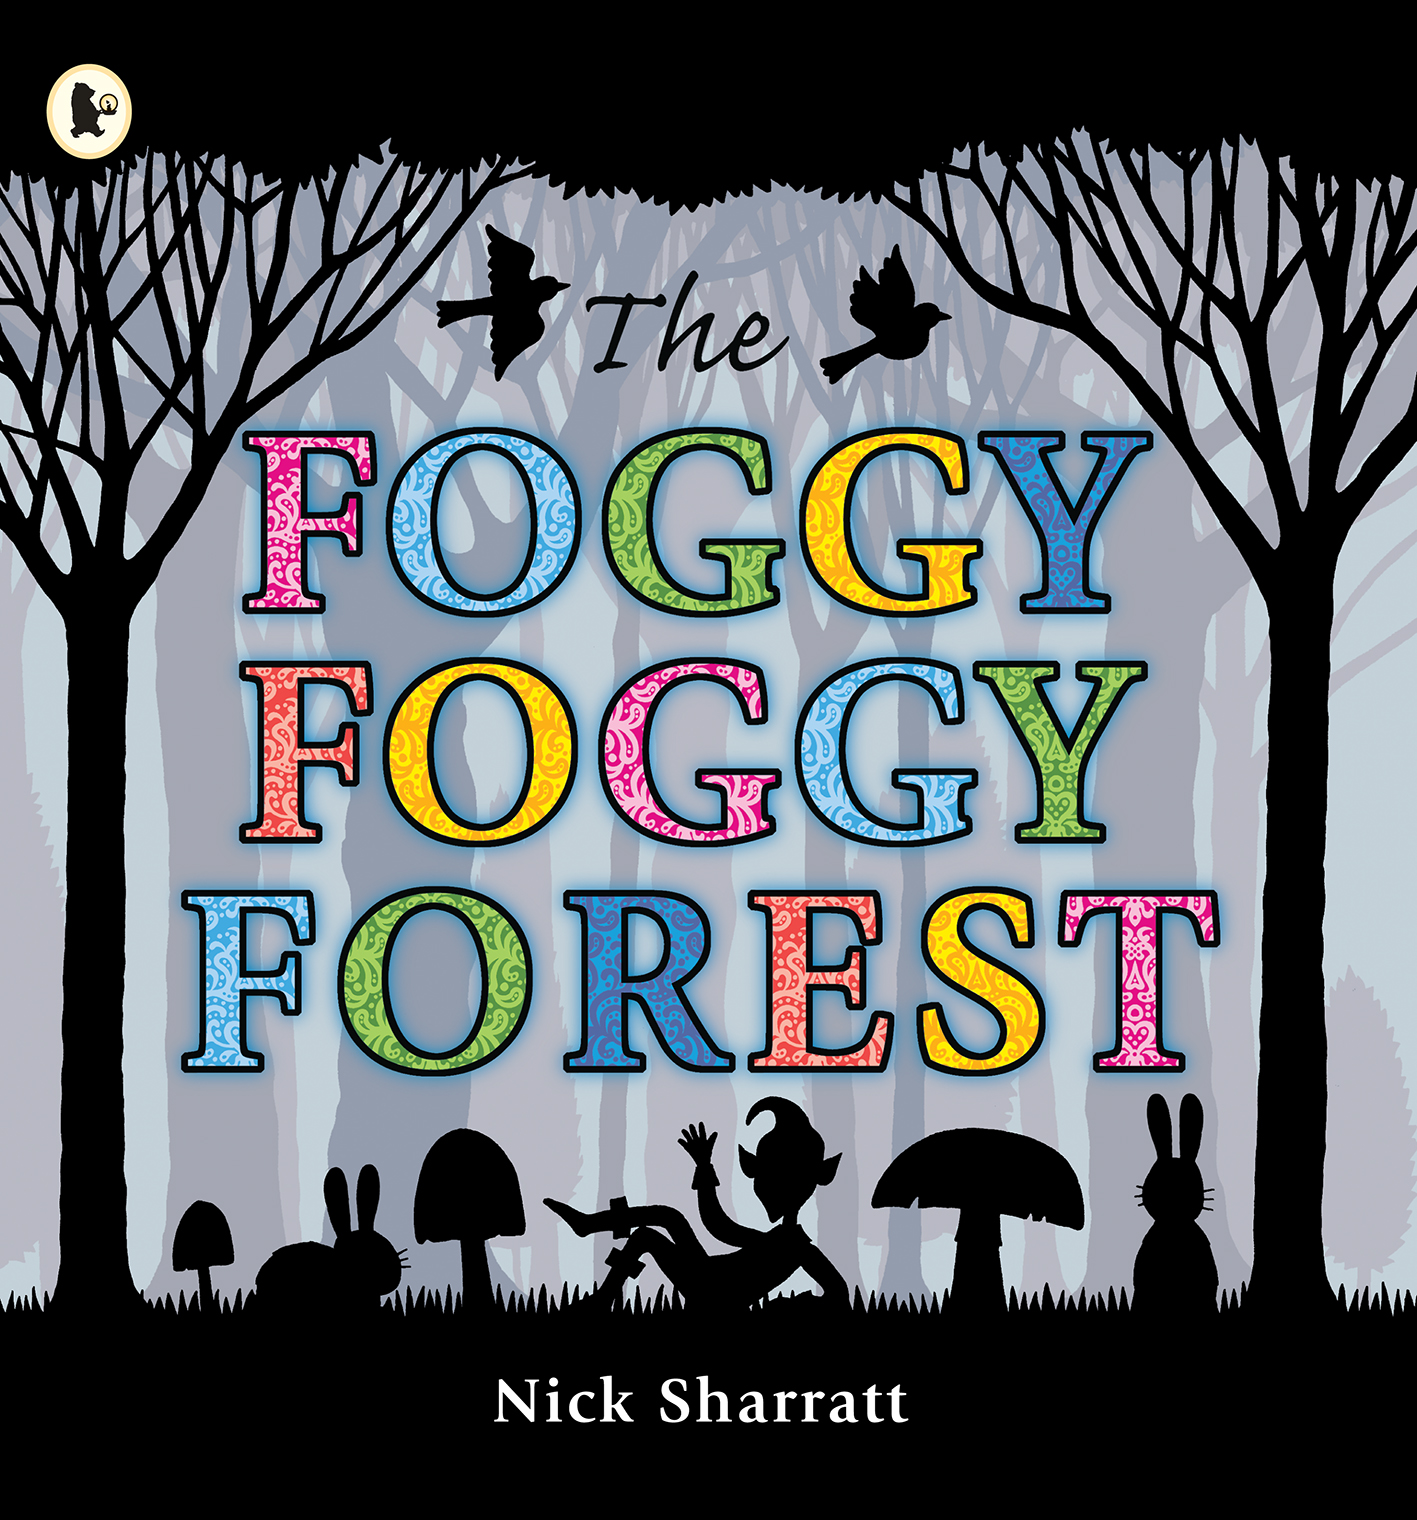 The-Foggy-Foggy-Forest